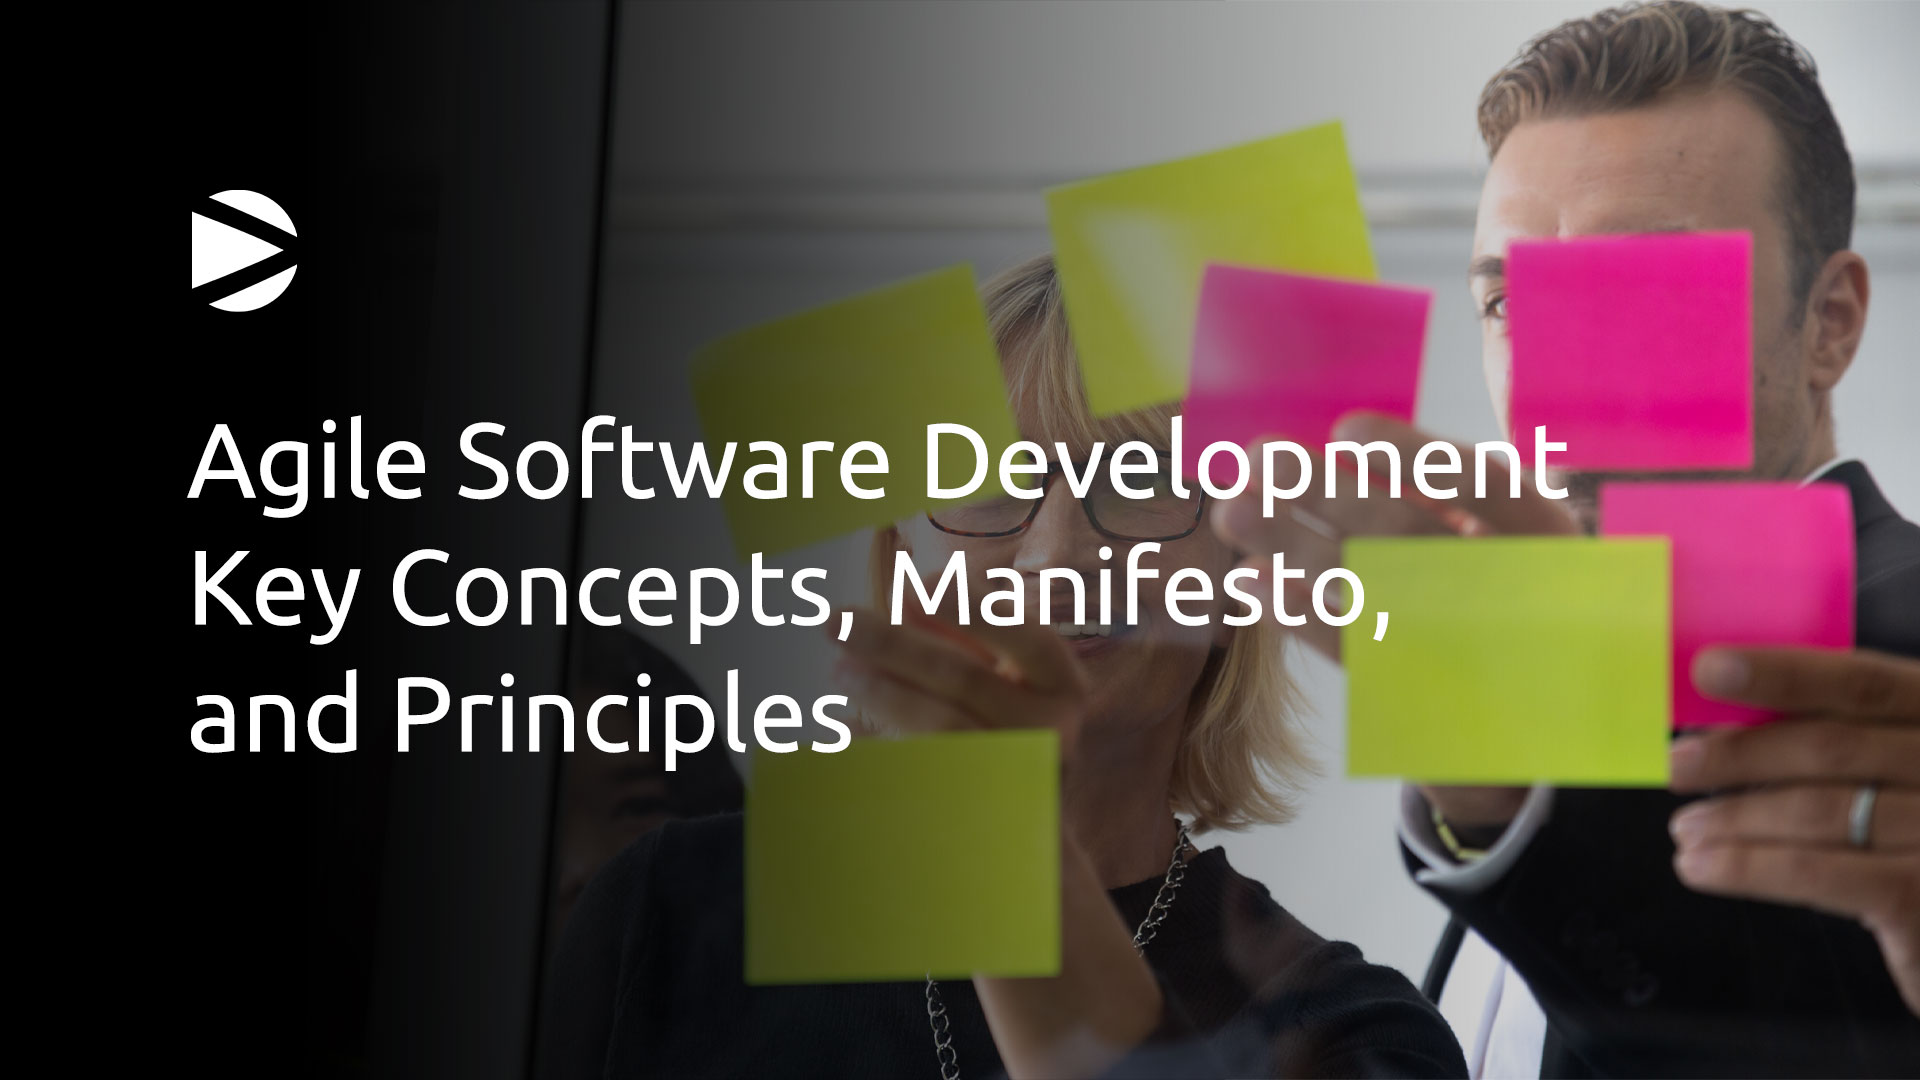 Agile Software Development Key Concepts, Manifesto and Principles